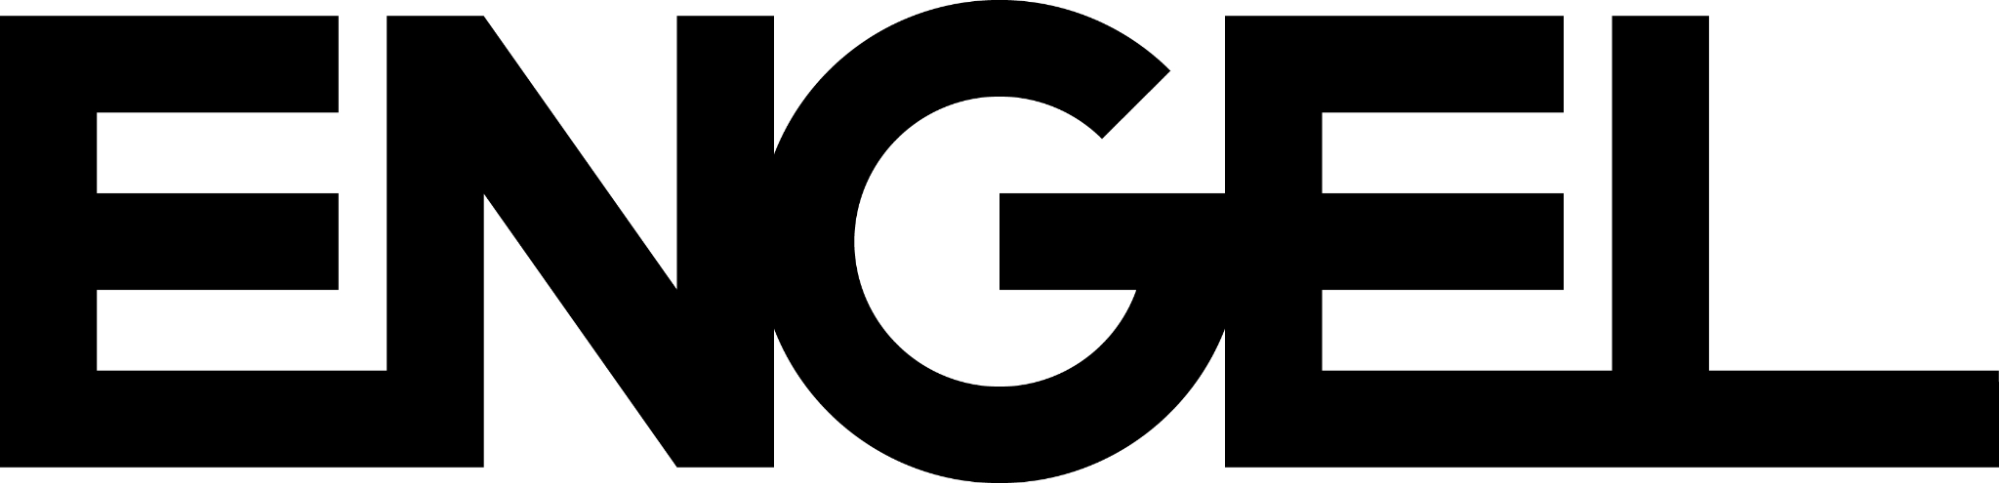 Engel Global Logo